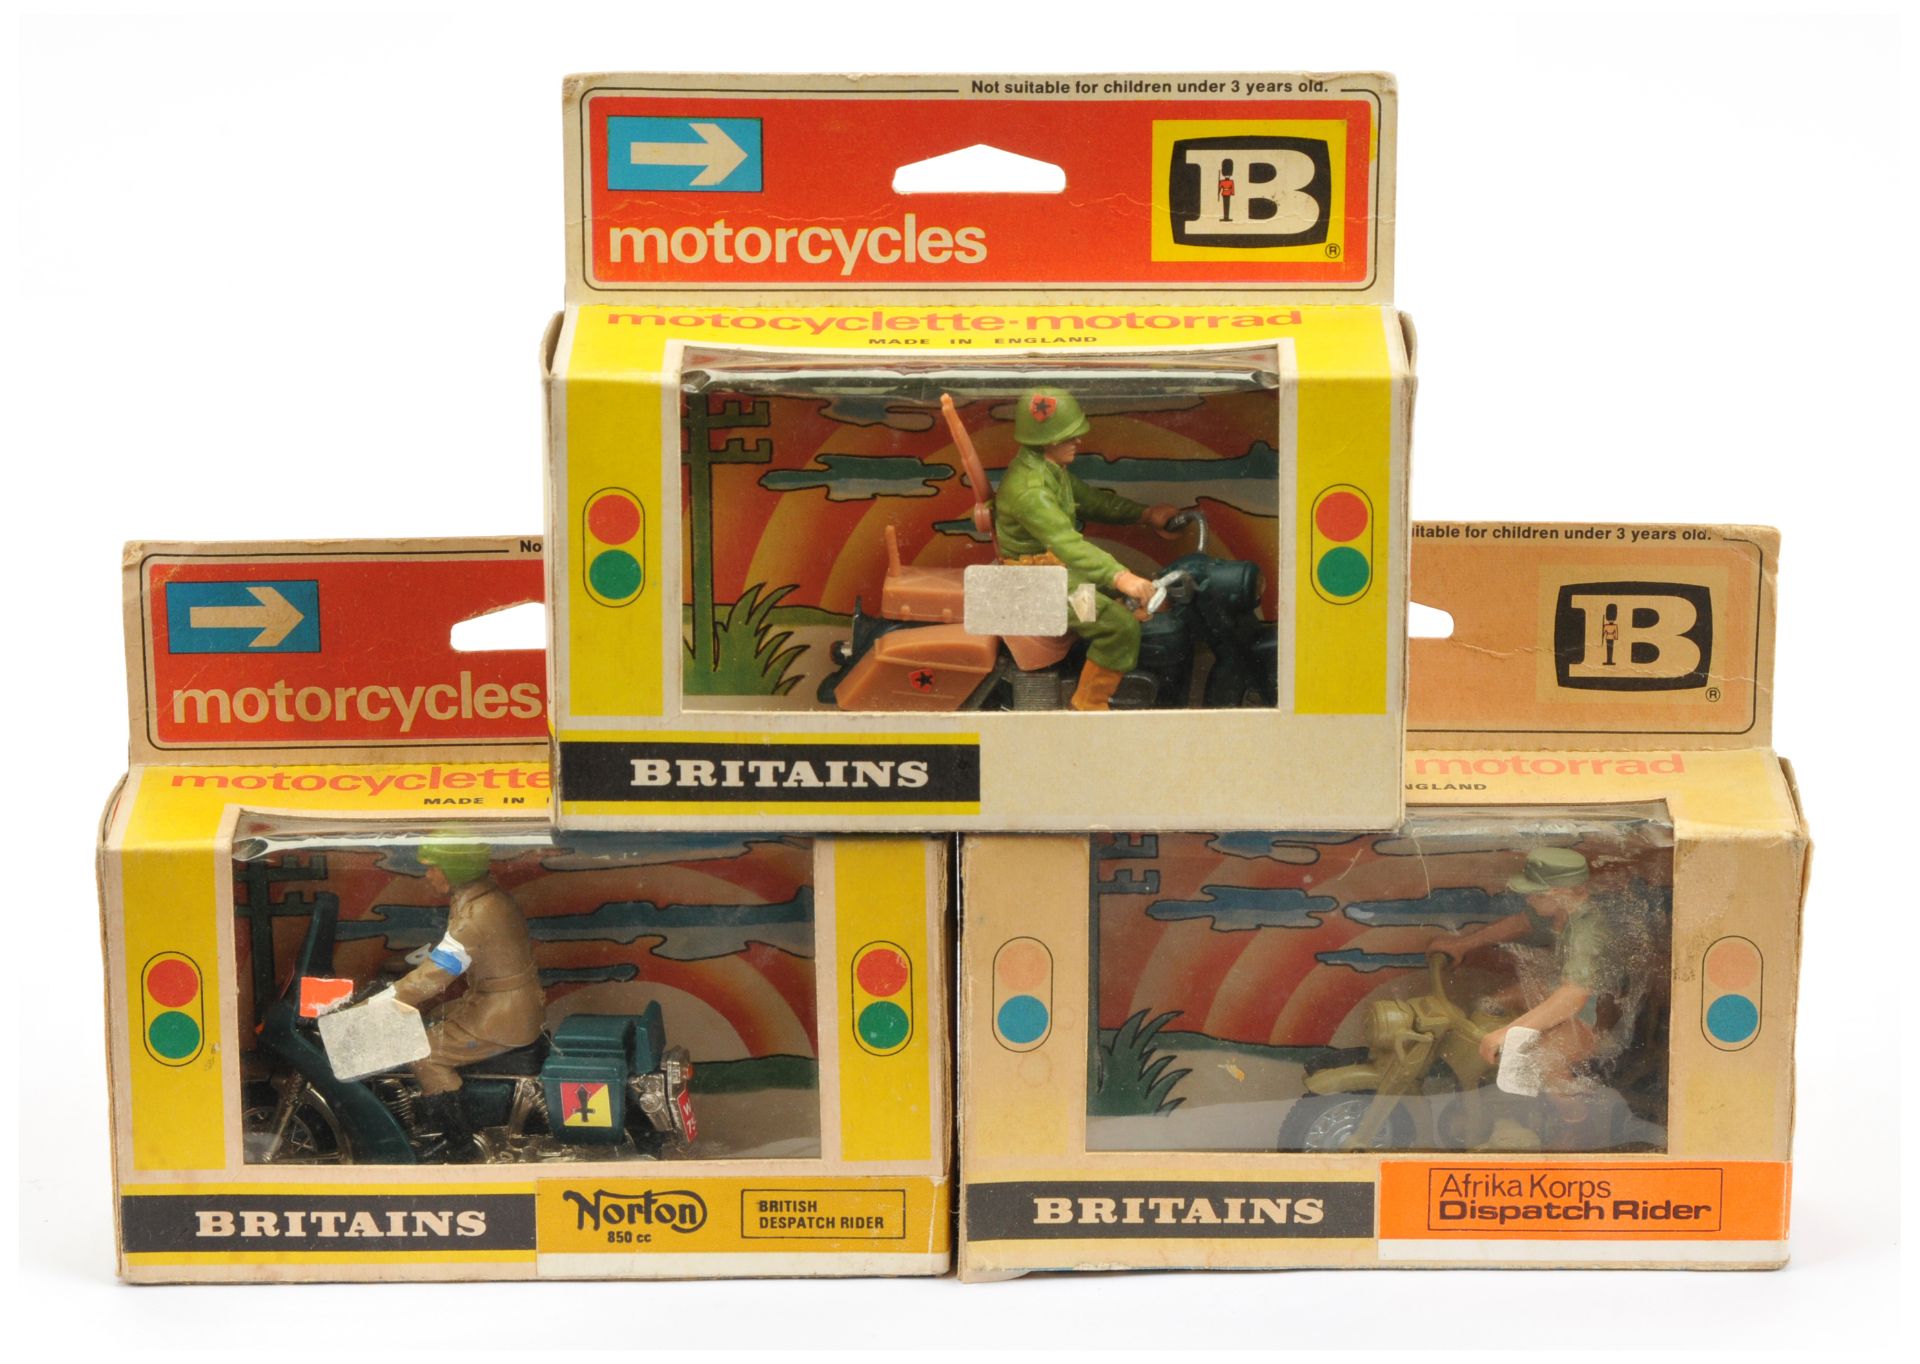 Britains motorbikes a group of 3 - (1) 9762 Norton 850cc British despatch rider,